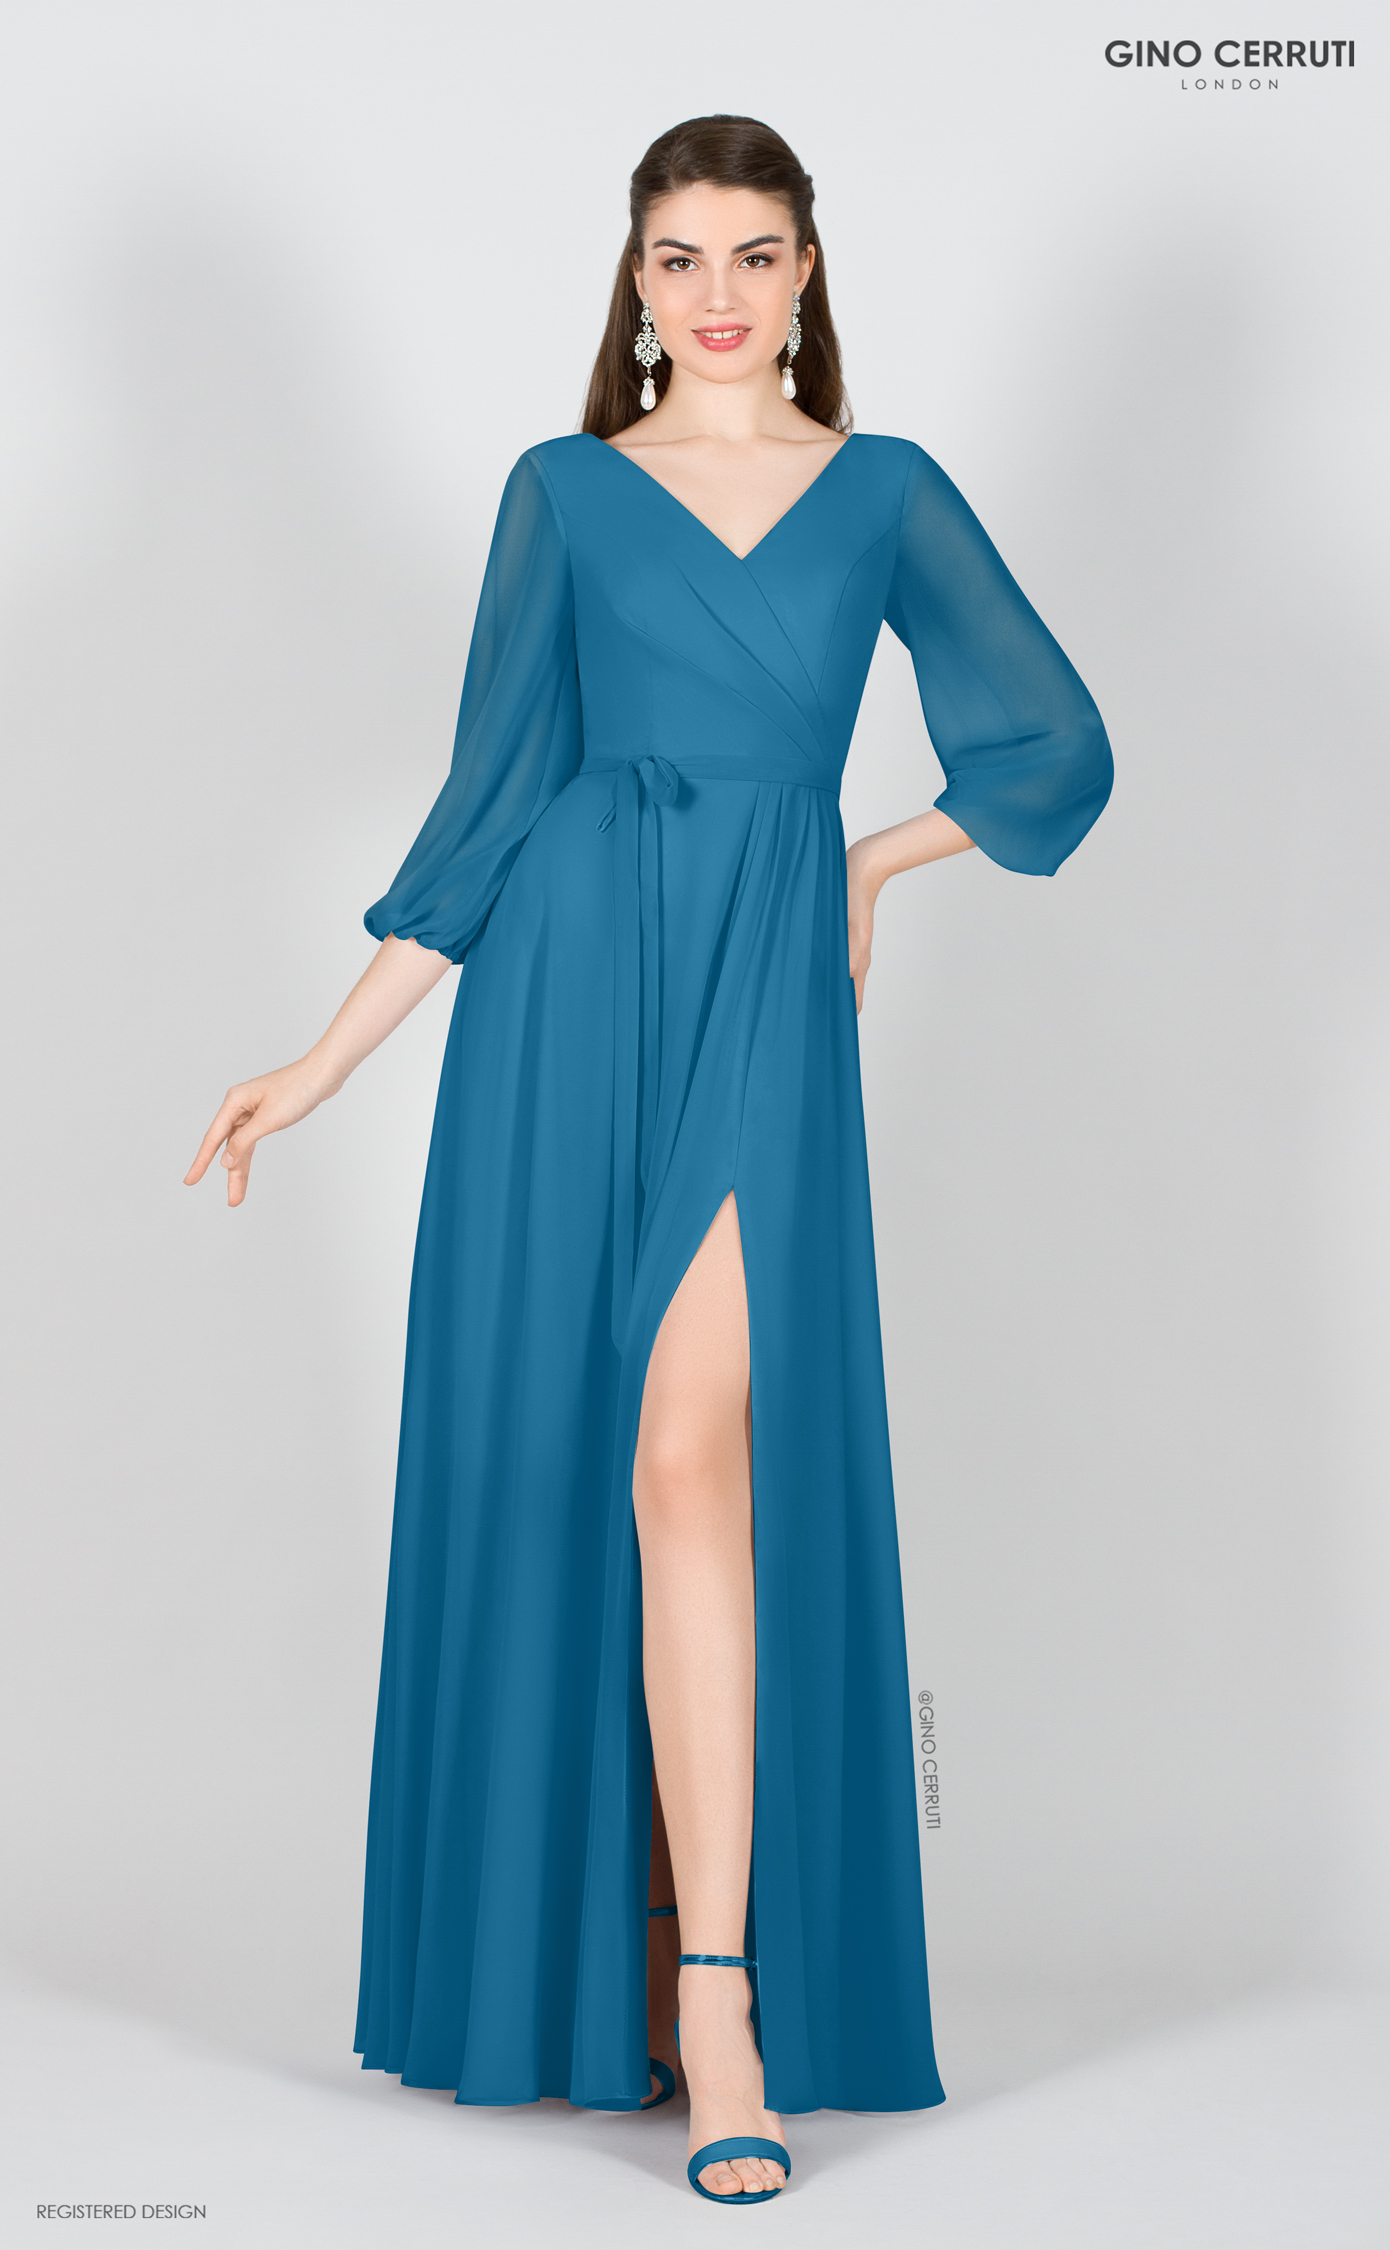 The graceful Bianca designer dress by Gino Cerutii, London